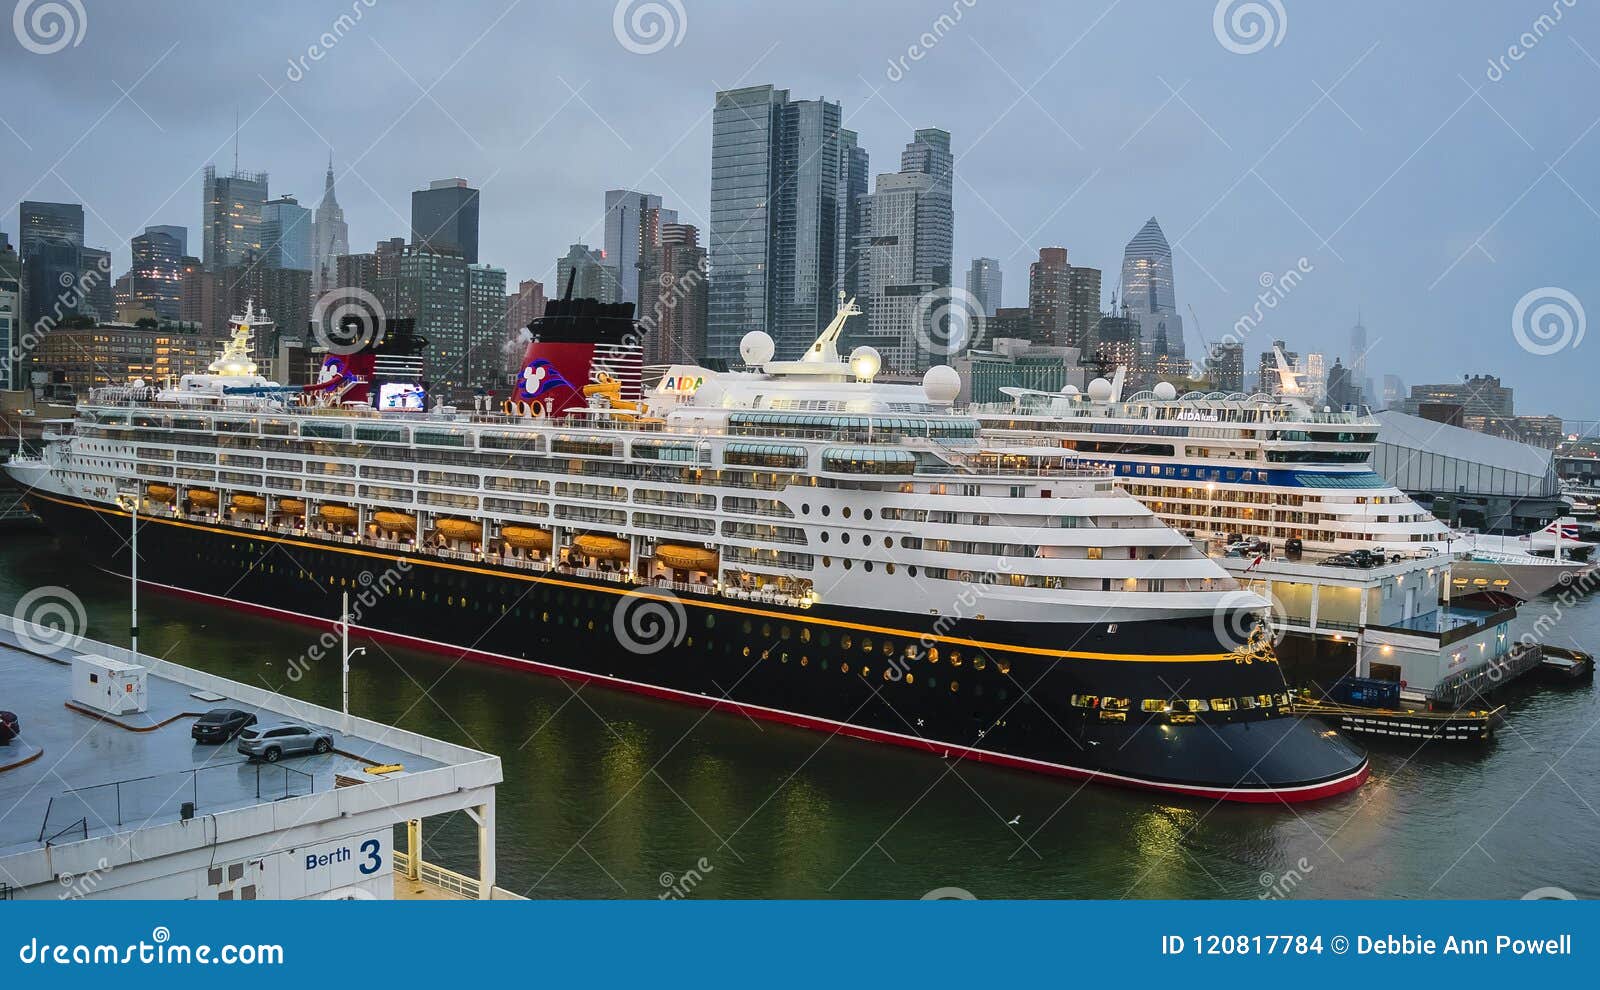 disney cruise line new york terminal